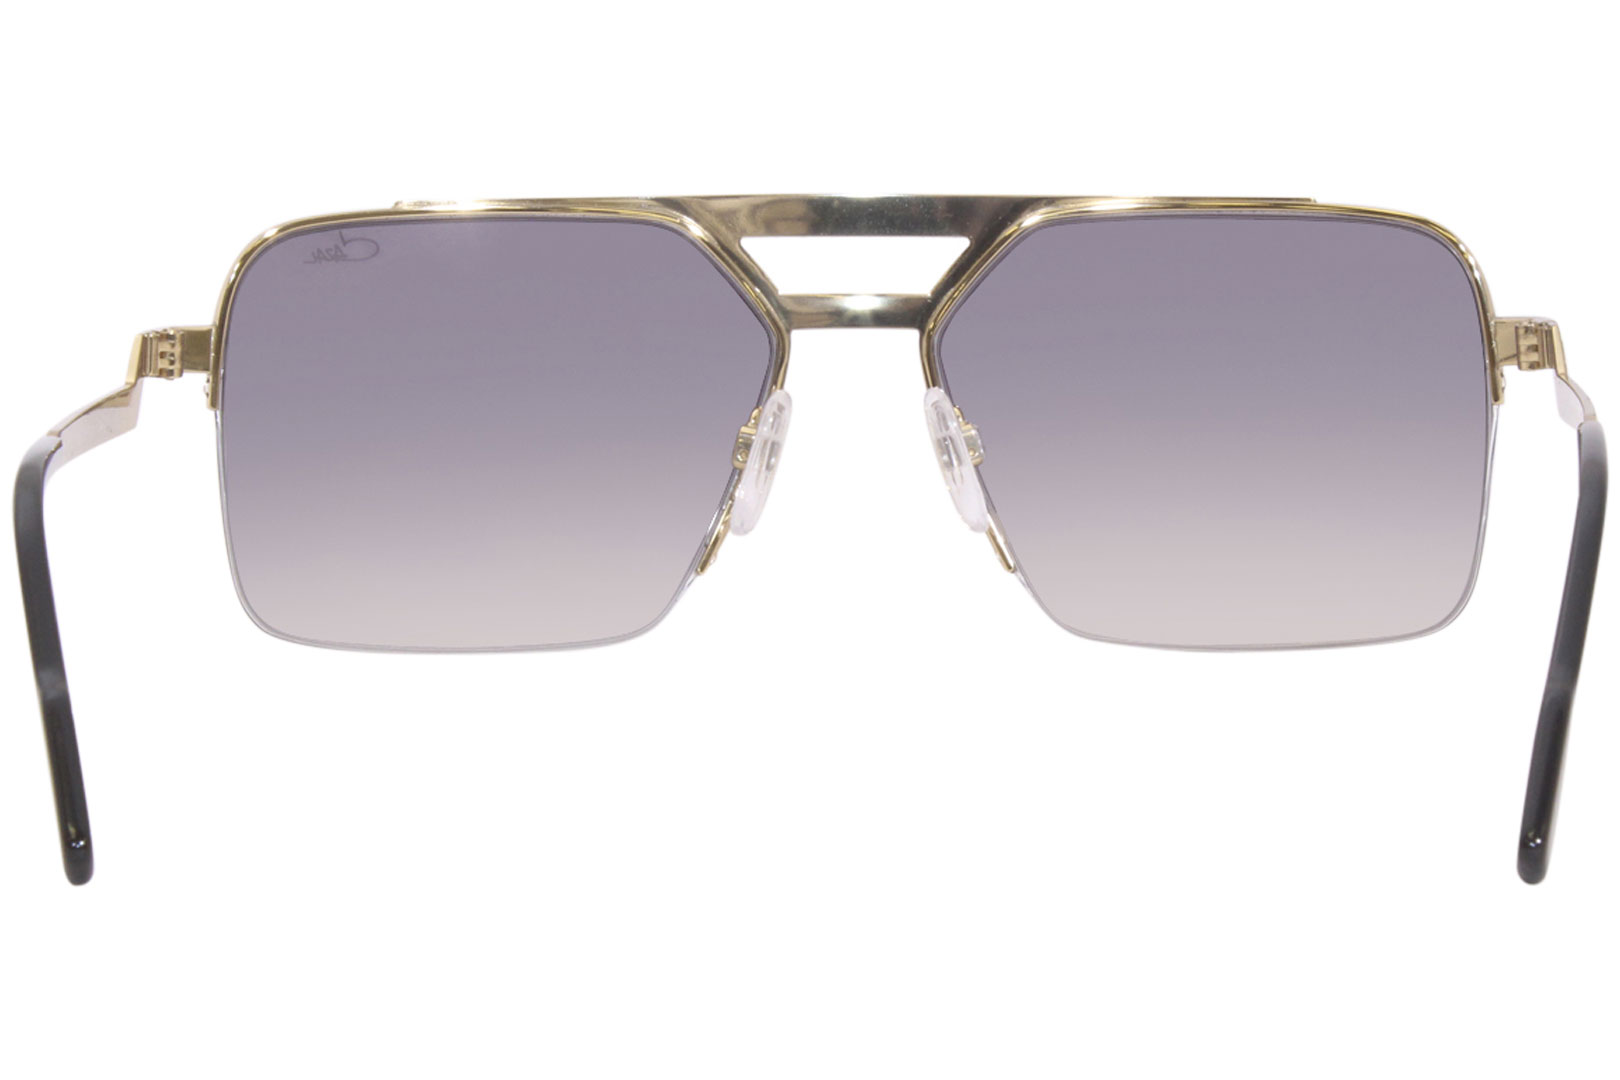 CAZAL Sunglasses Cazal 9102 001 Black Gold Grey Gradient 61 18 140 